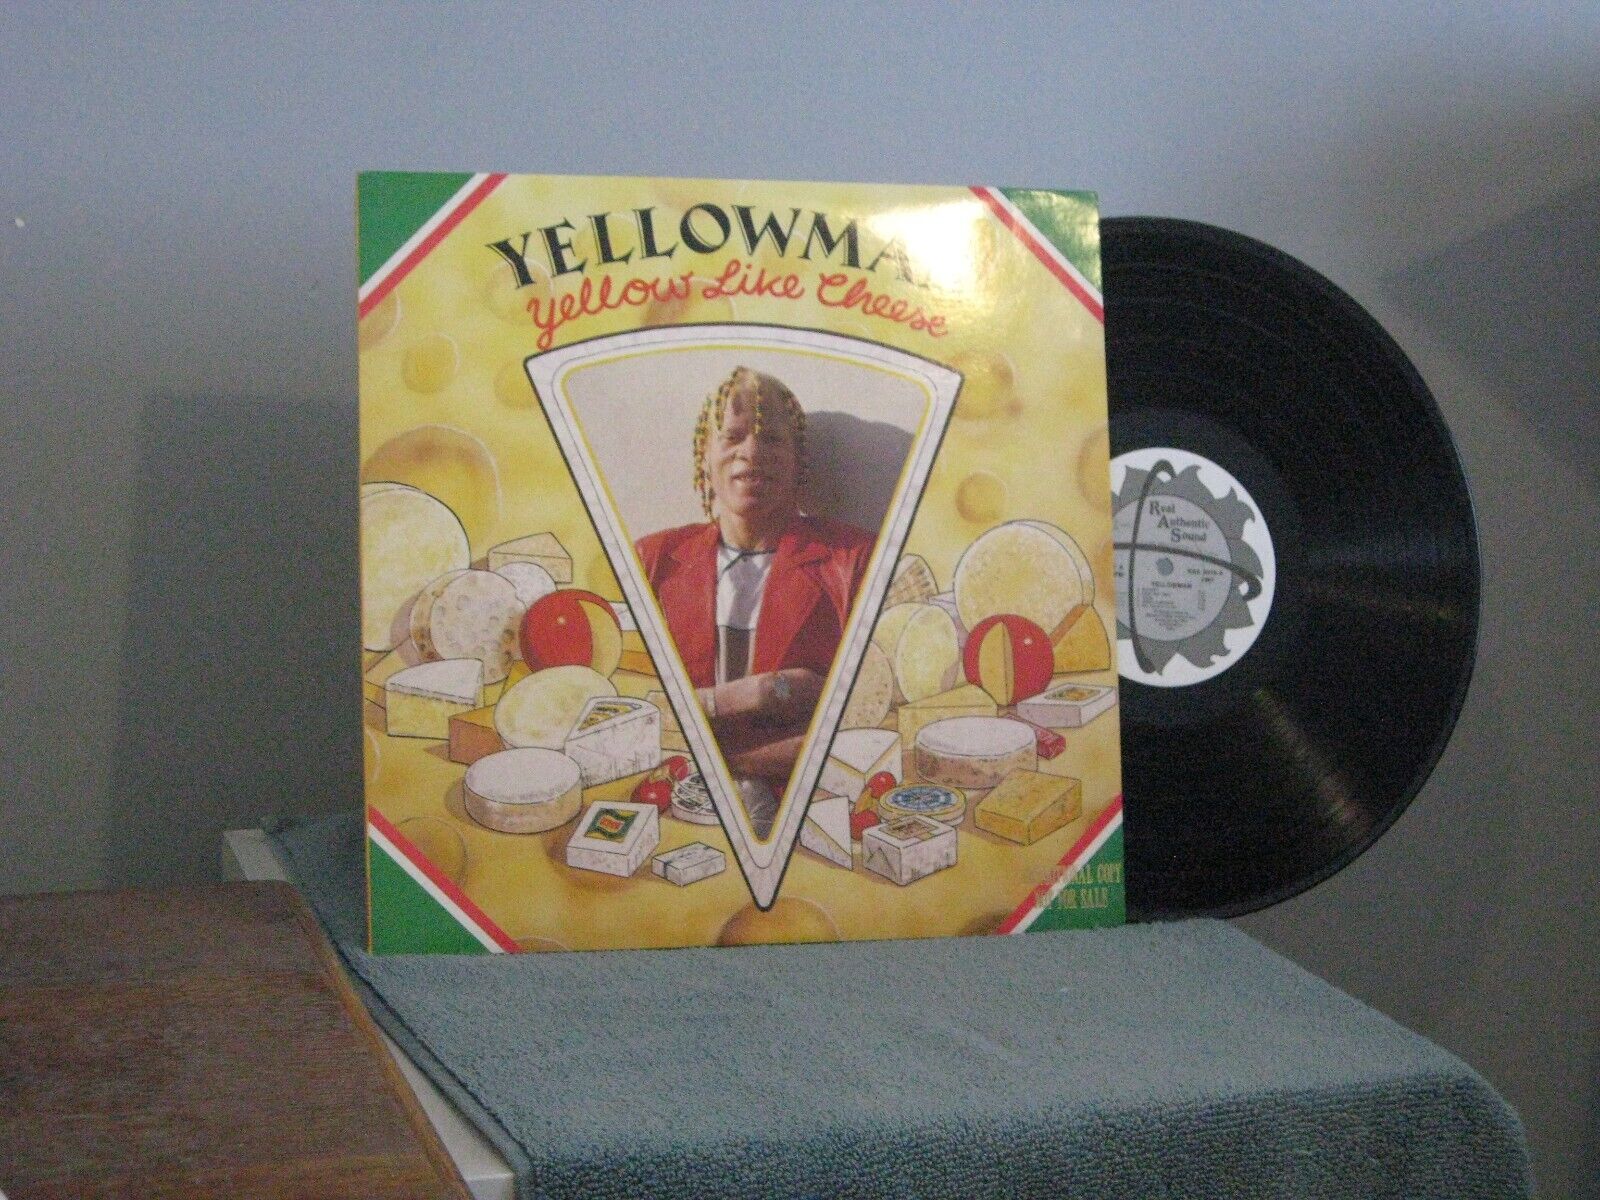 YELLOWMAN - Yellow Like Cheese 1987 RAS Record (RAS3019) ORIG 1st US Press 